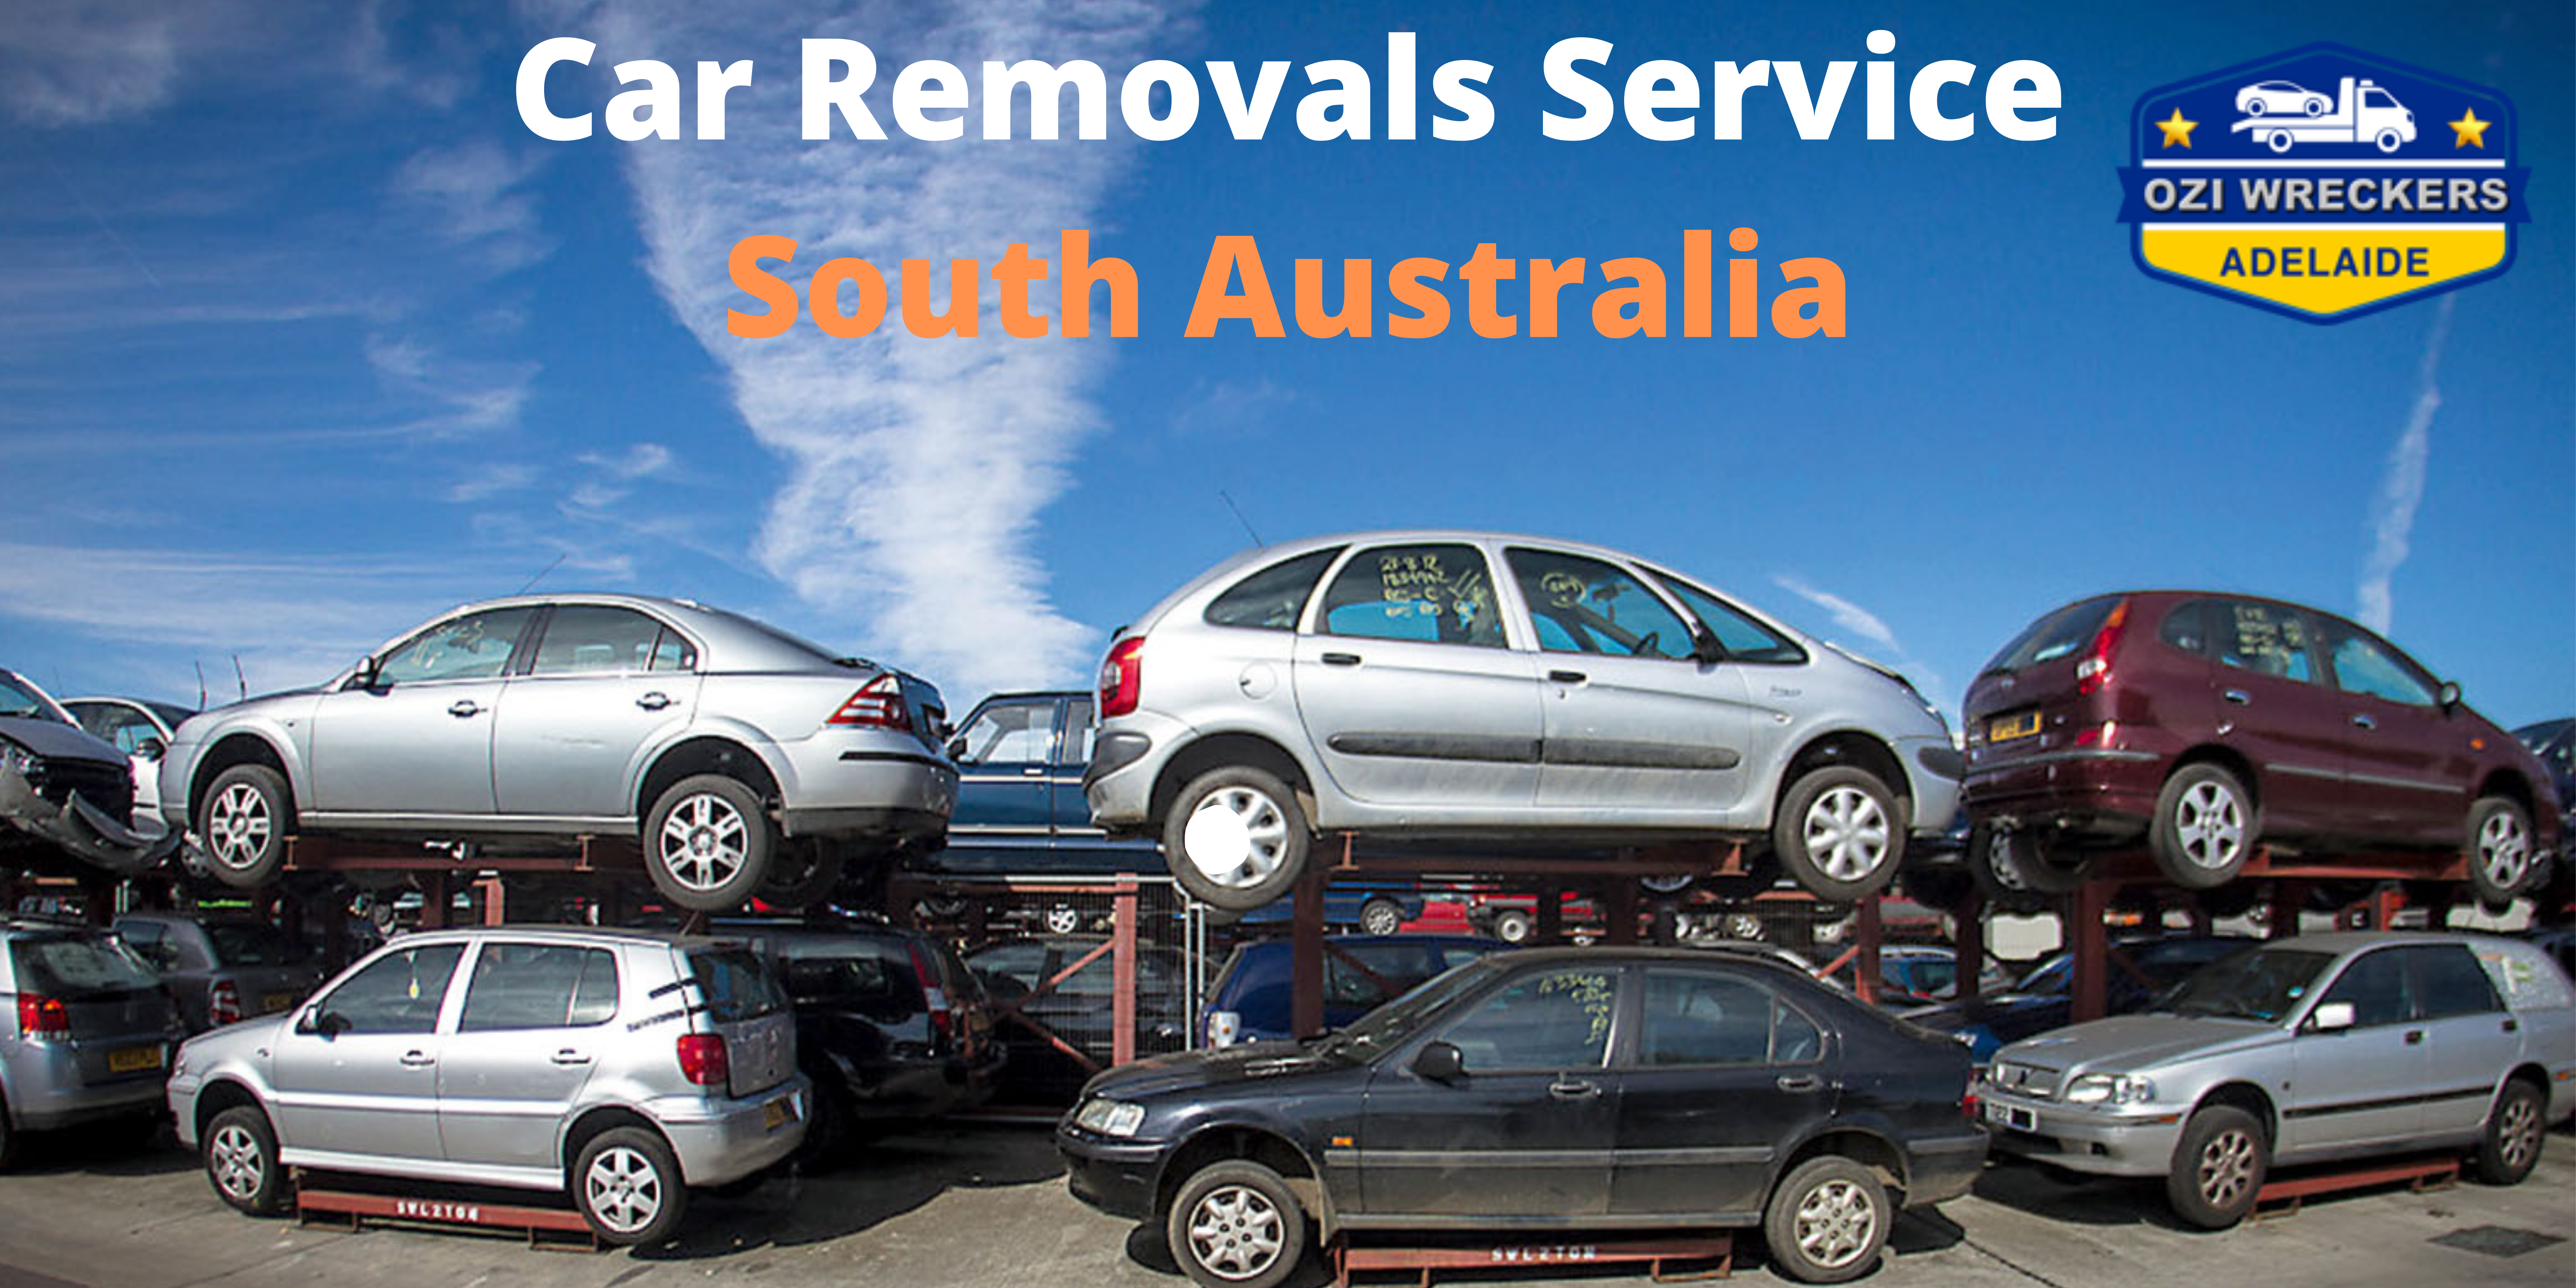 Car Removals Service South Australia